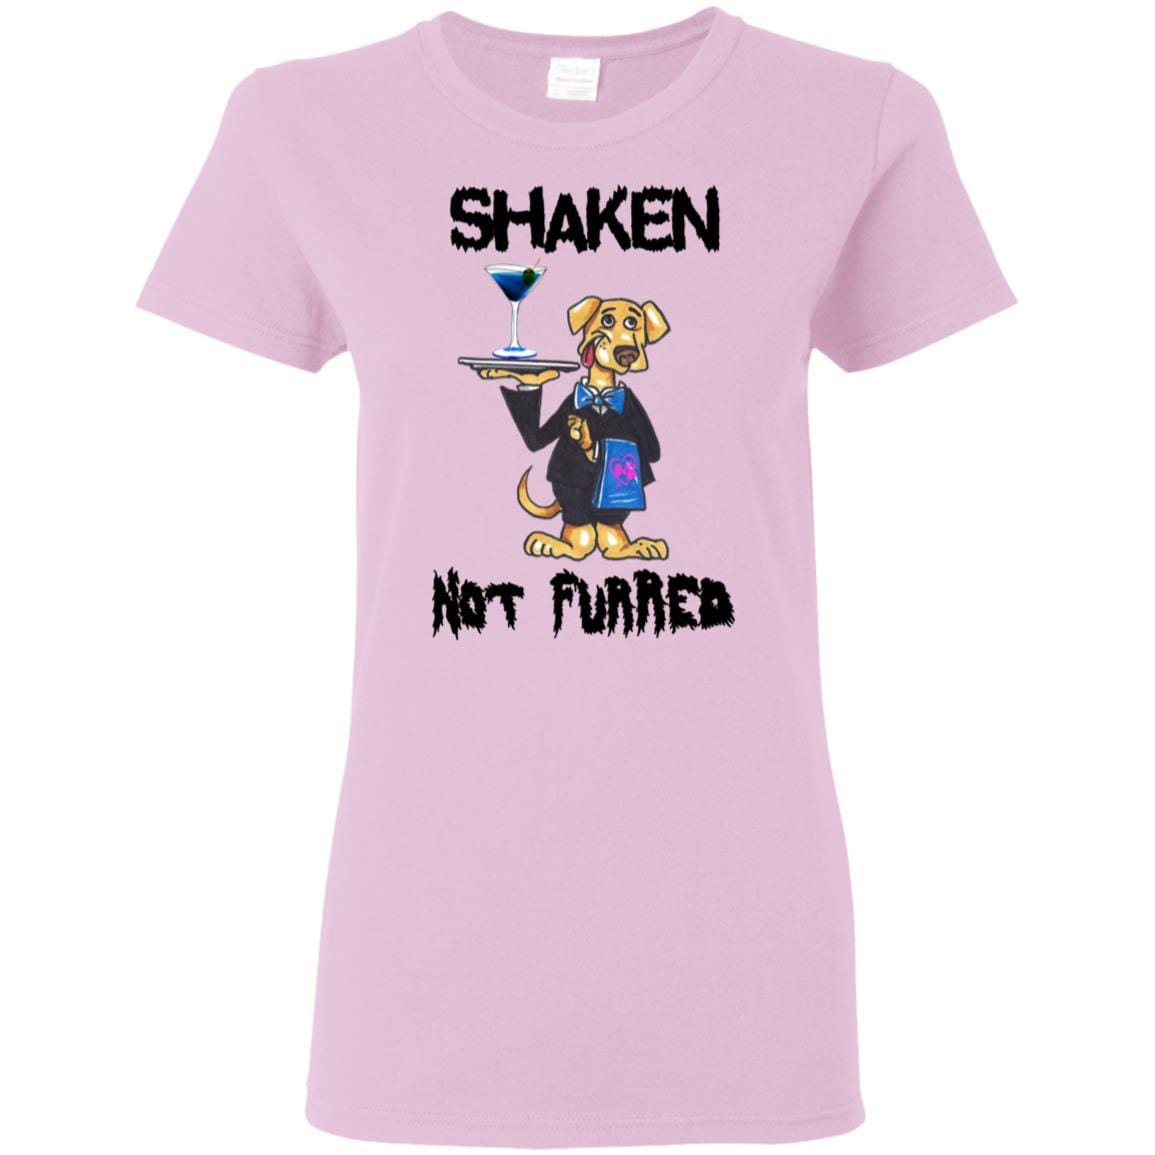 T-Shirts Light Pink / S WineyBitches.Co "Shaken Not Furred" Ladies' 5.3 oz. T-Shirt WineyBitchesCo